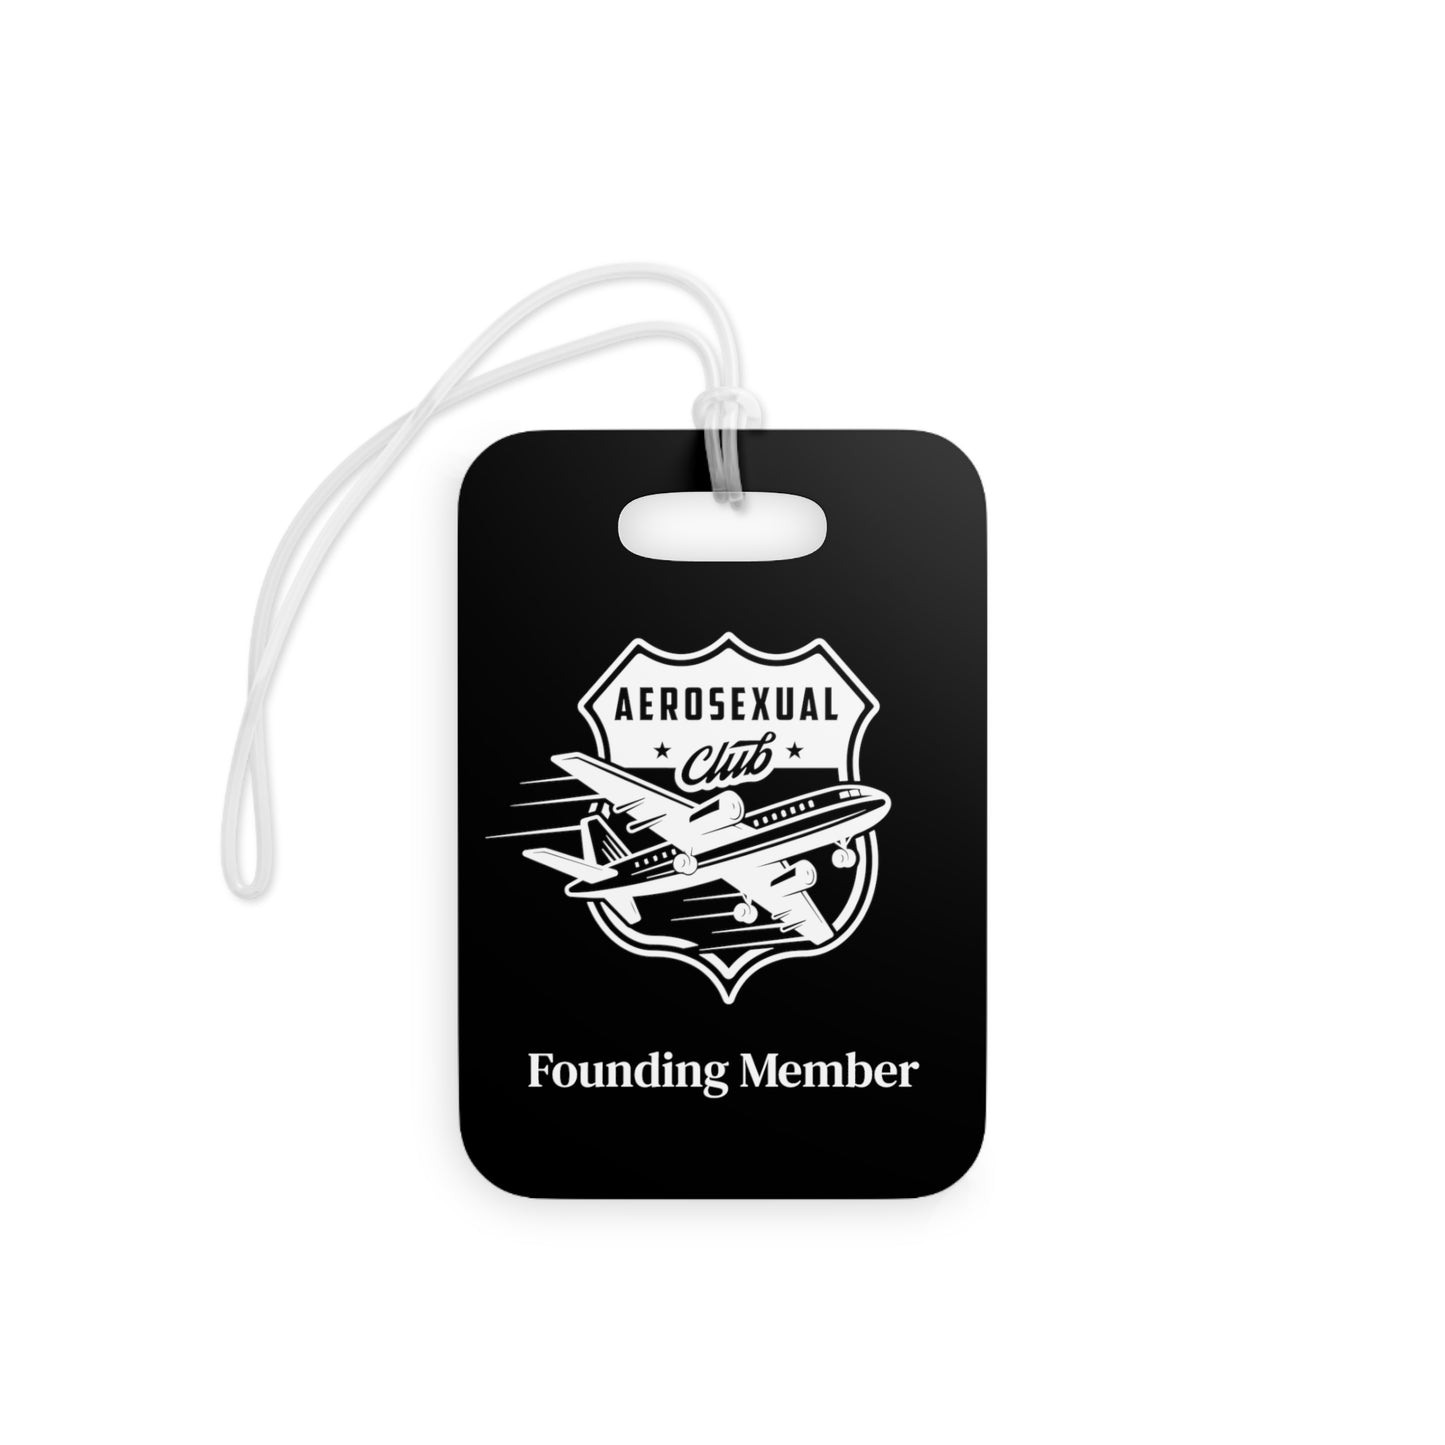 Aerosexual Club Founding Member Luggage Tag Black (Limited Edition)